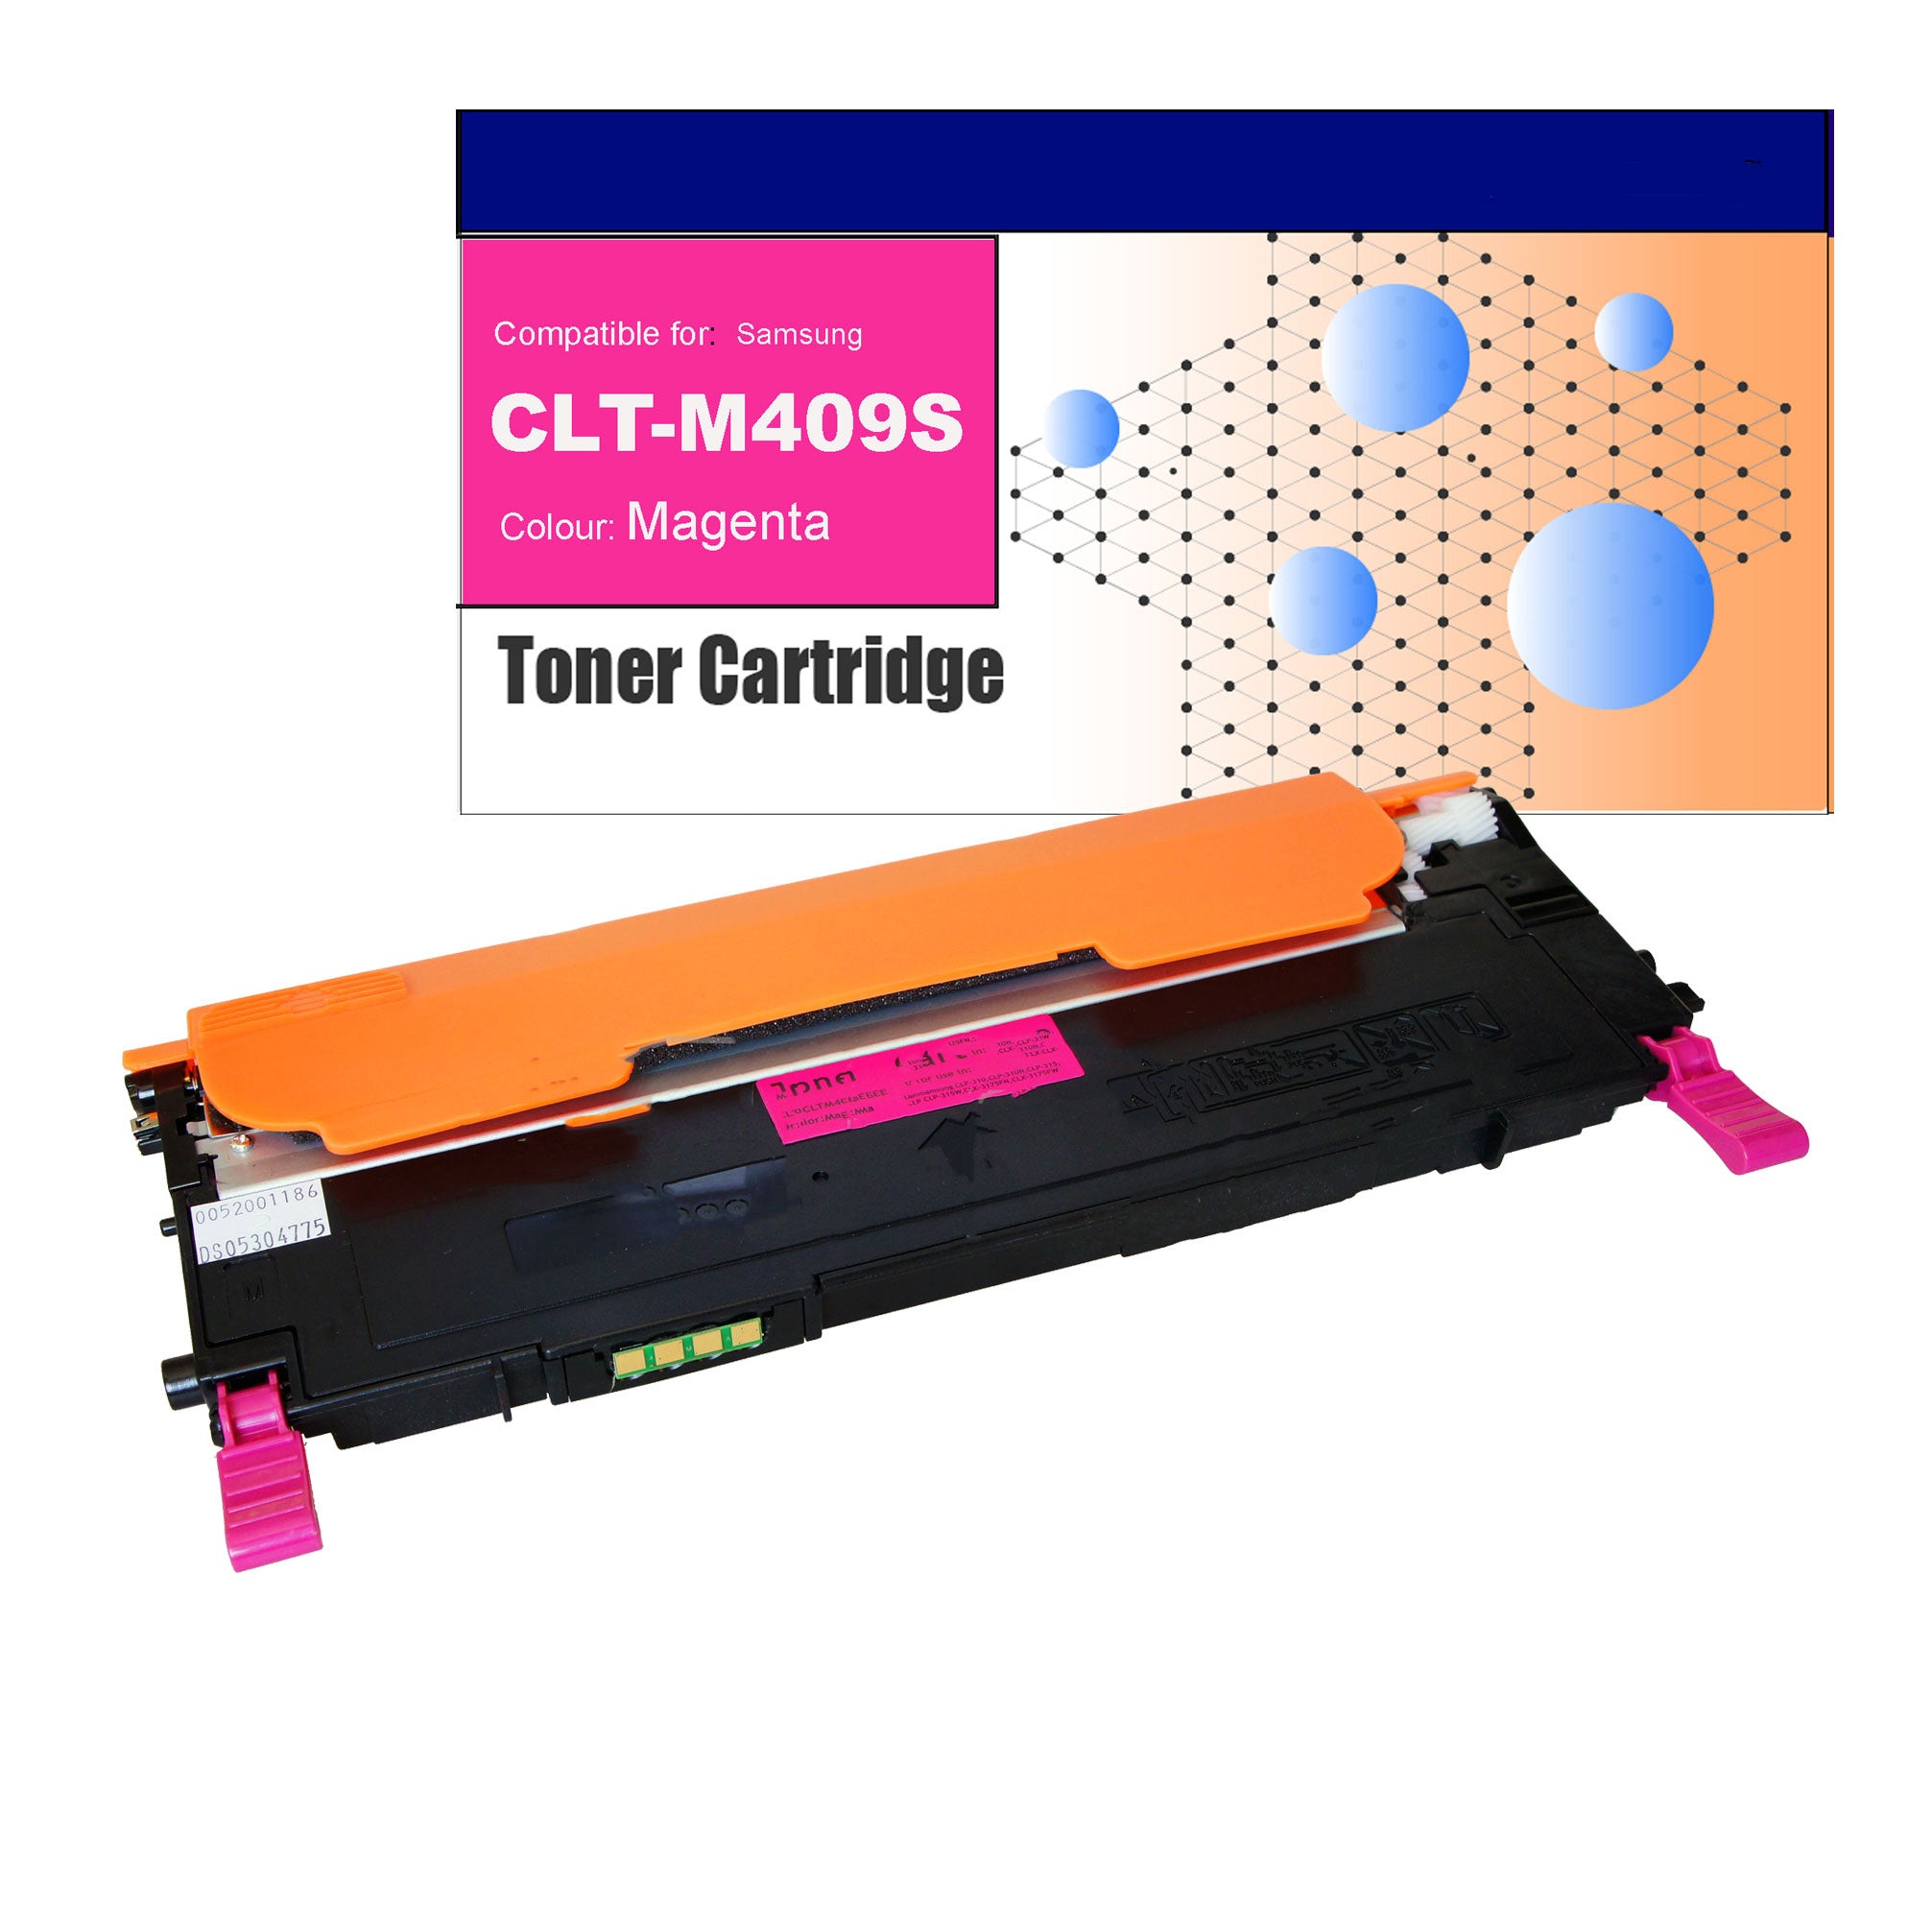 Compatible Toner for Samsung CLT-M409S (SU274A) MagentaToner Cartridges